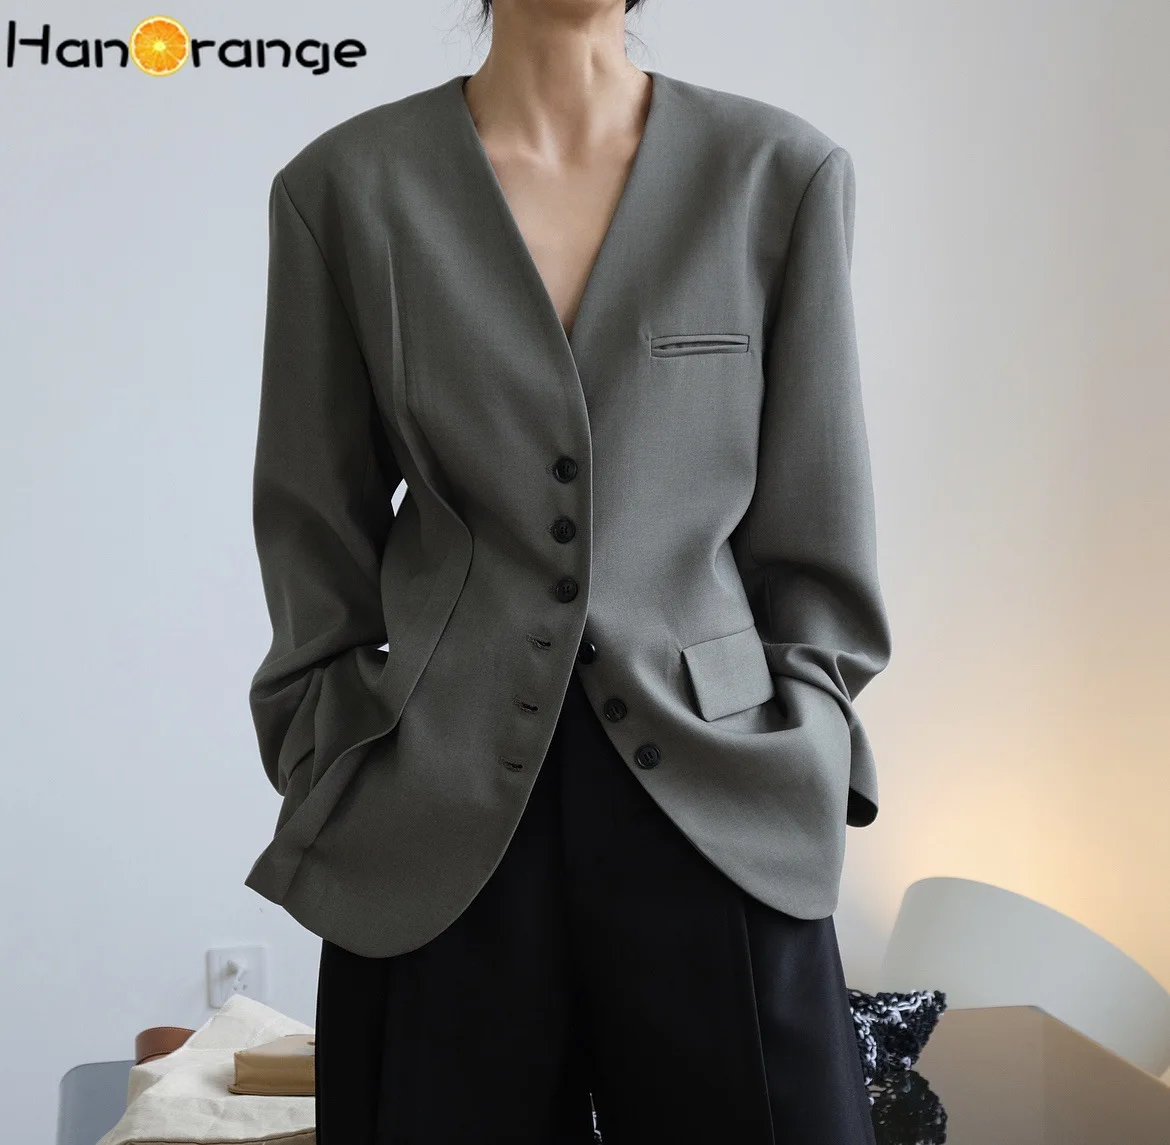 HanOrange Early Autumn Japanese Style Loose Blazer Women Designer Style Neutral Profile Suit Jacket Single Breasted Outwear